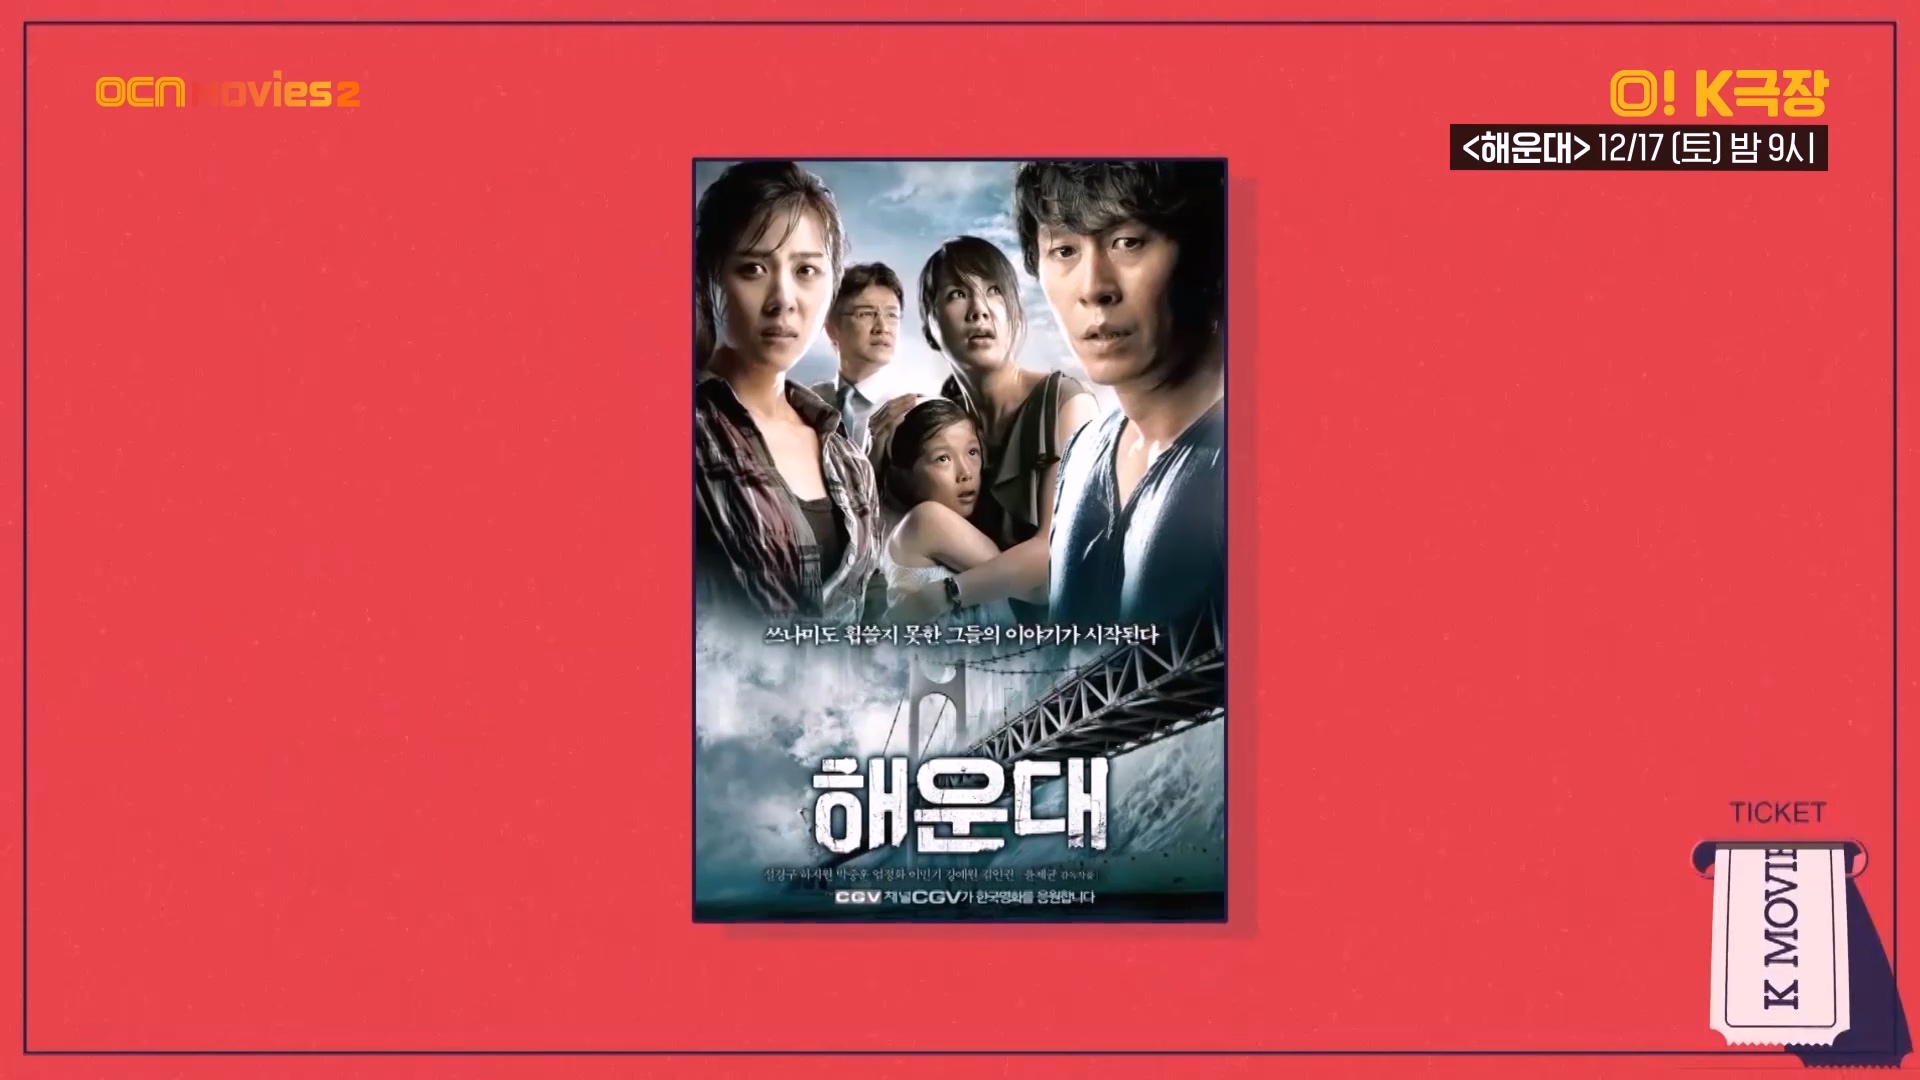 OCN Movies2 I [O! K극장] #해운대 12/17 (토) 밤 9시